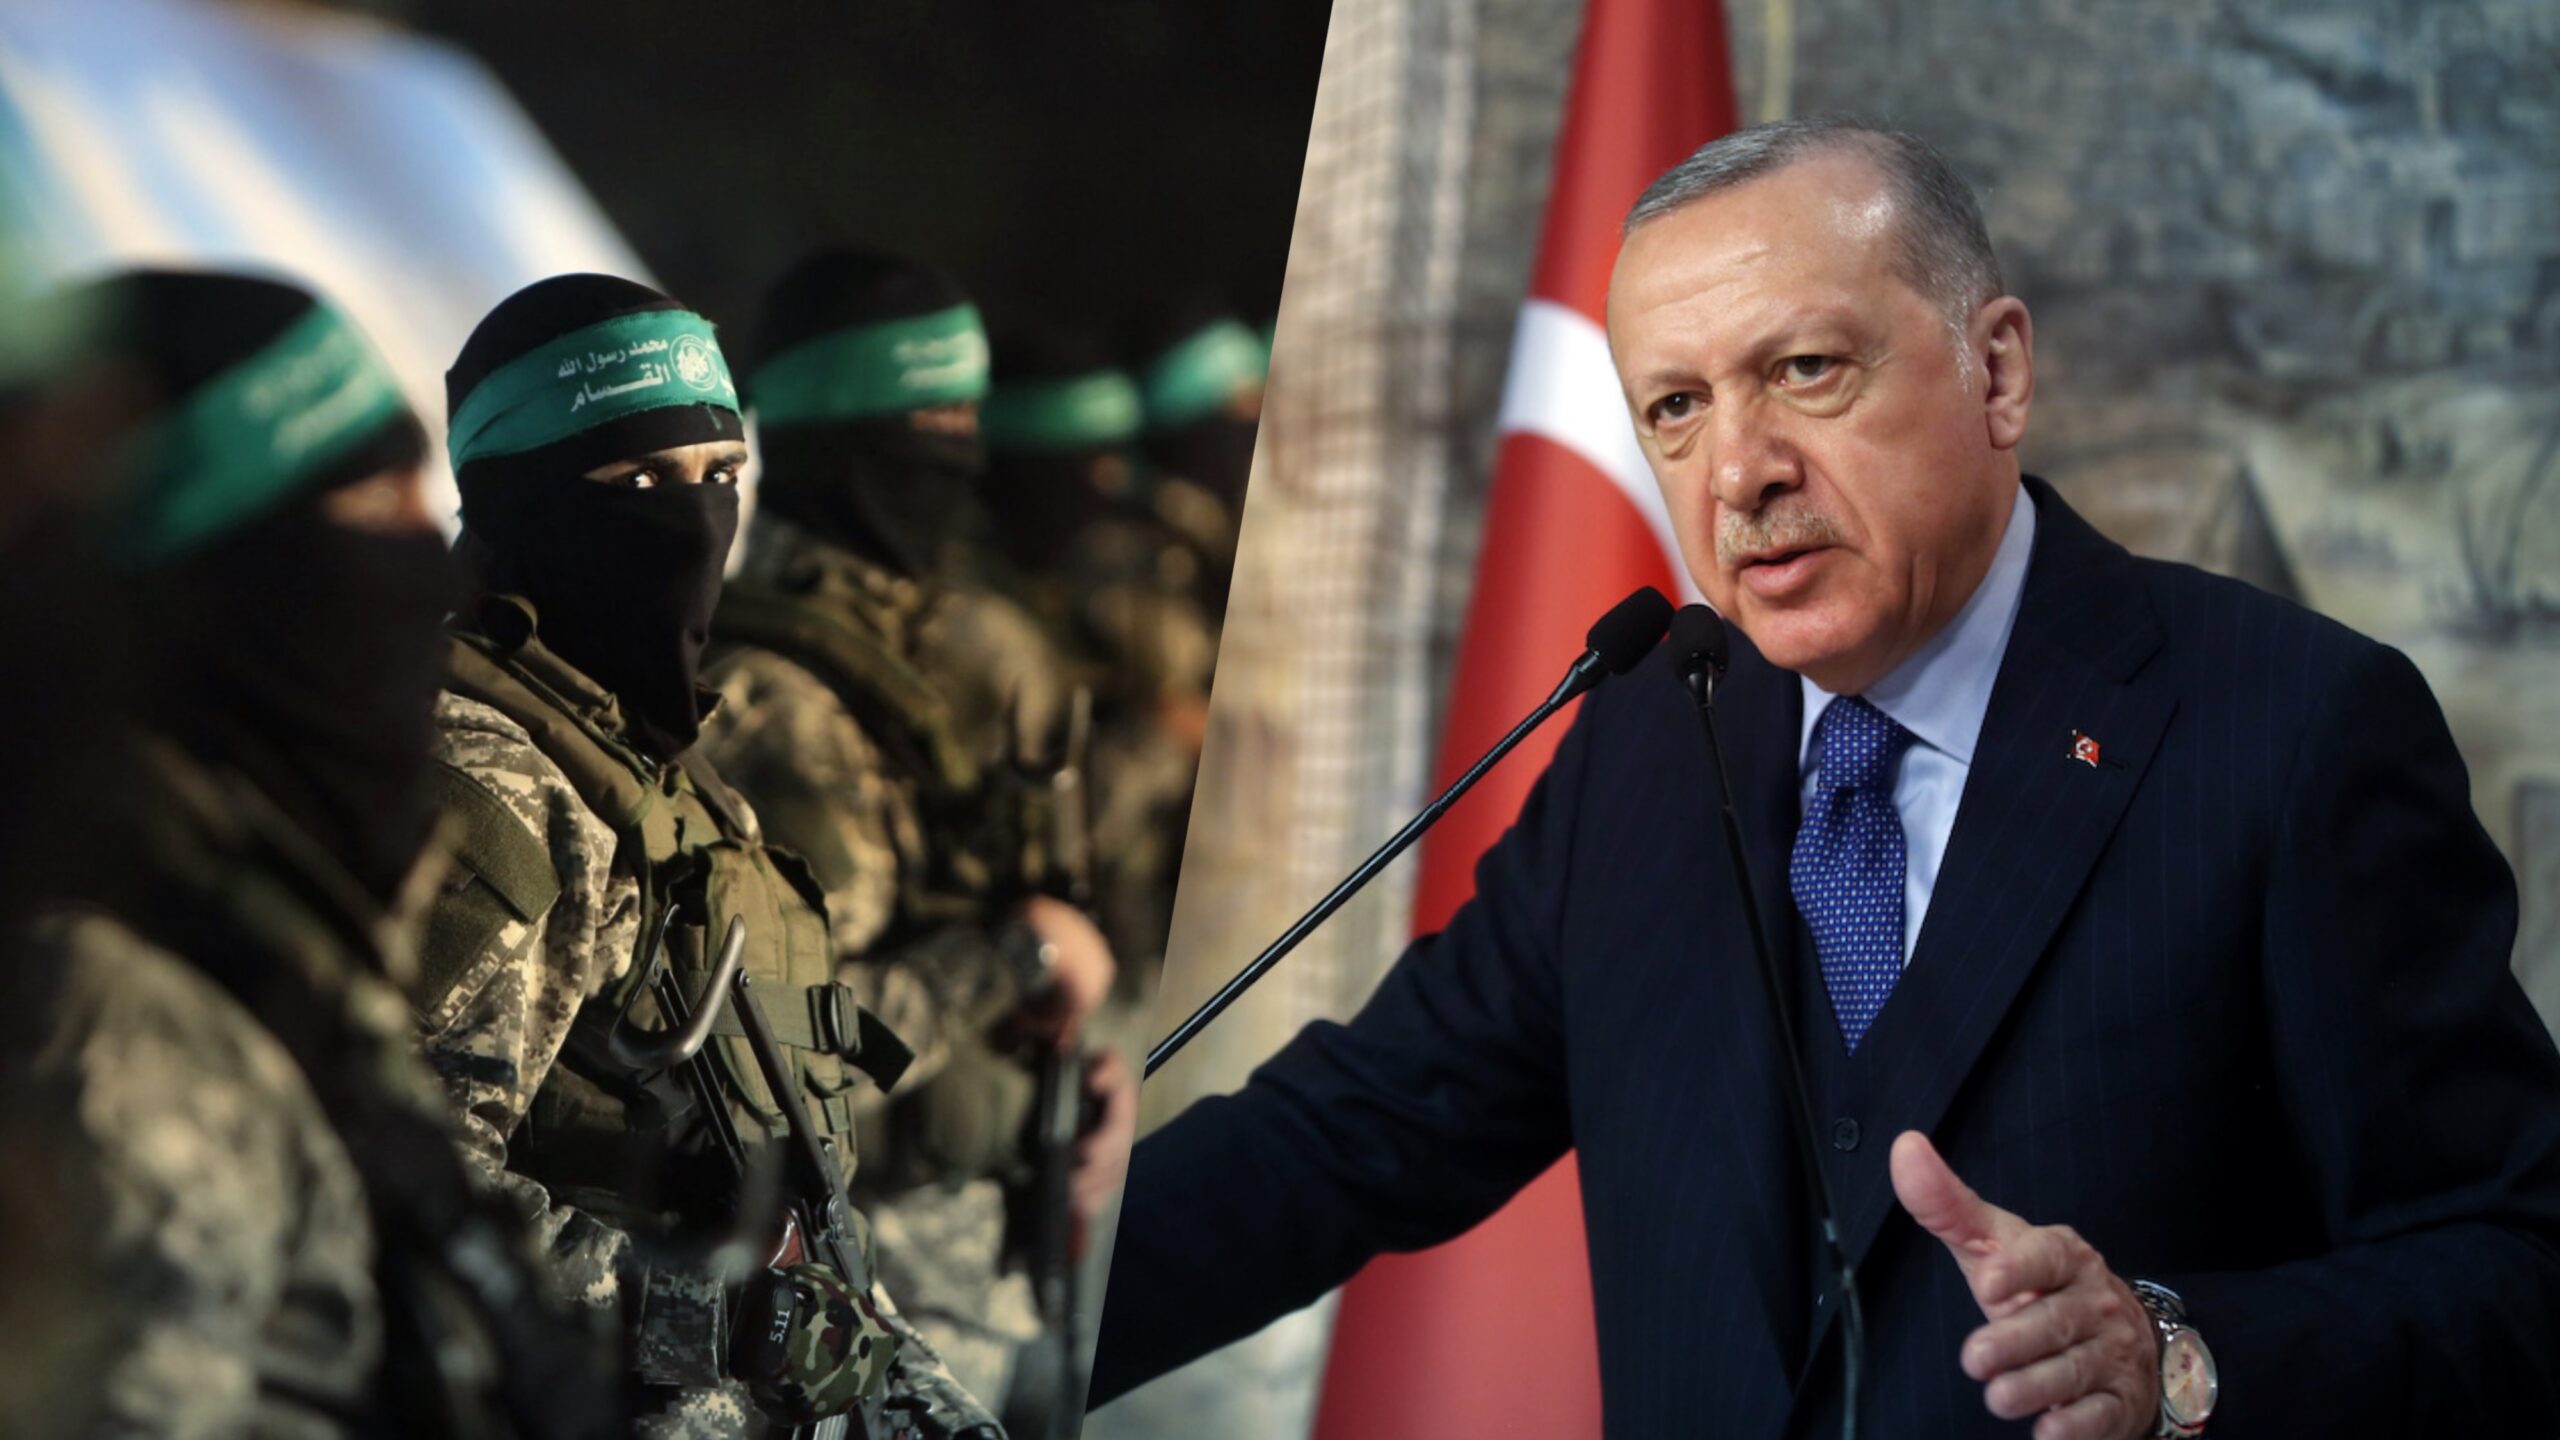 Israel Says Turkey is Granting Passports to Hamas Members - Harbingers Daily